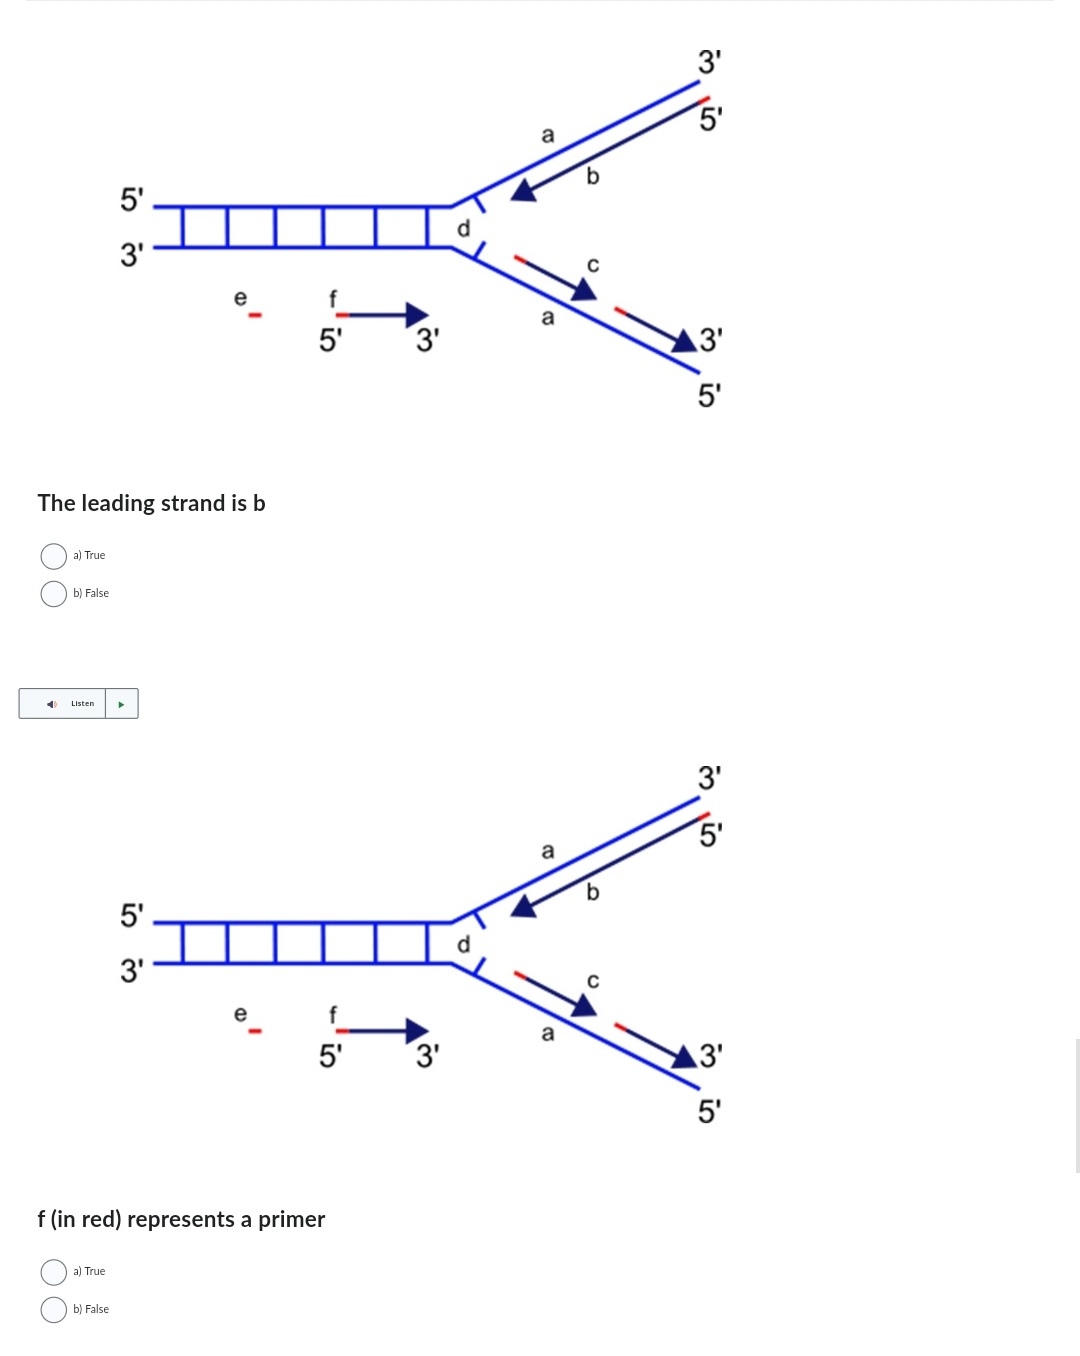 The leading strand is b
a) True
b) False
ED Listen
5'
3'
a) True
b) False
5'
i
3'
f
5'
f (in red) represents a primer
f
5'
3'
3'
a
a
b
3.15
3'
5'
3'
in
3.15
3'
5'
3'
5'